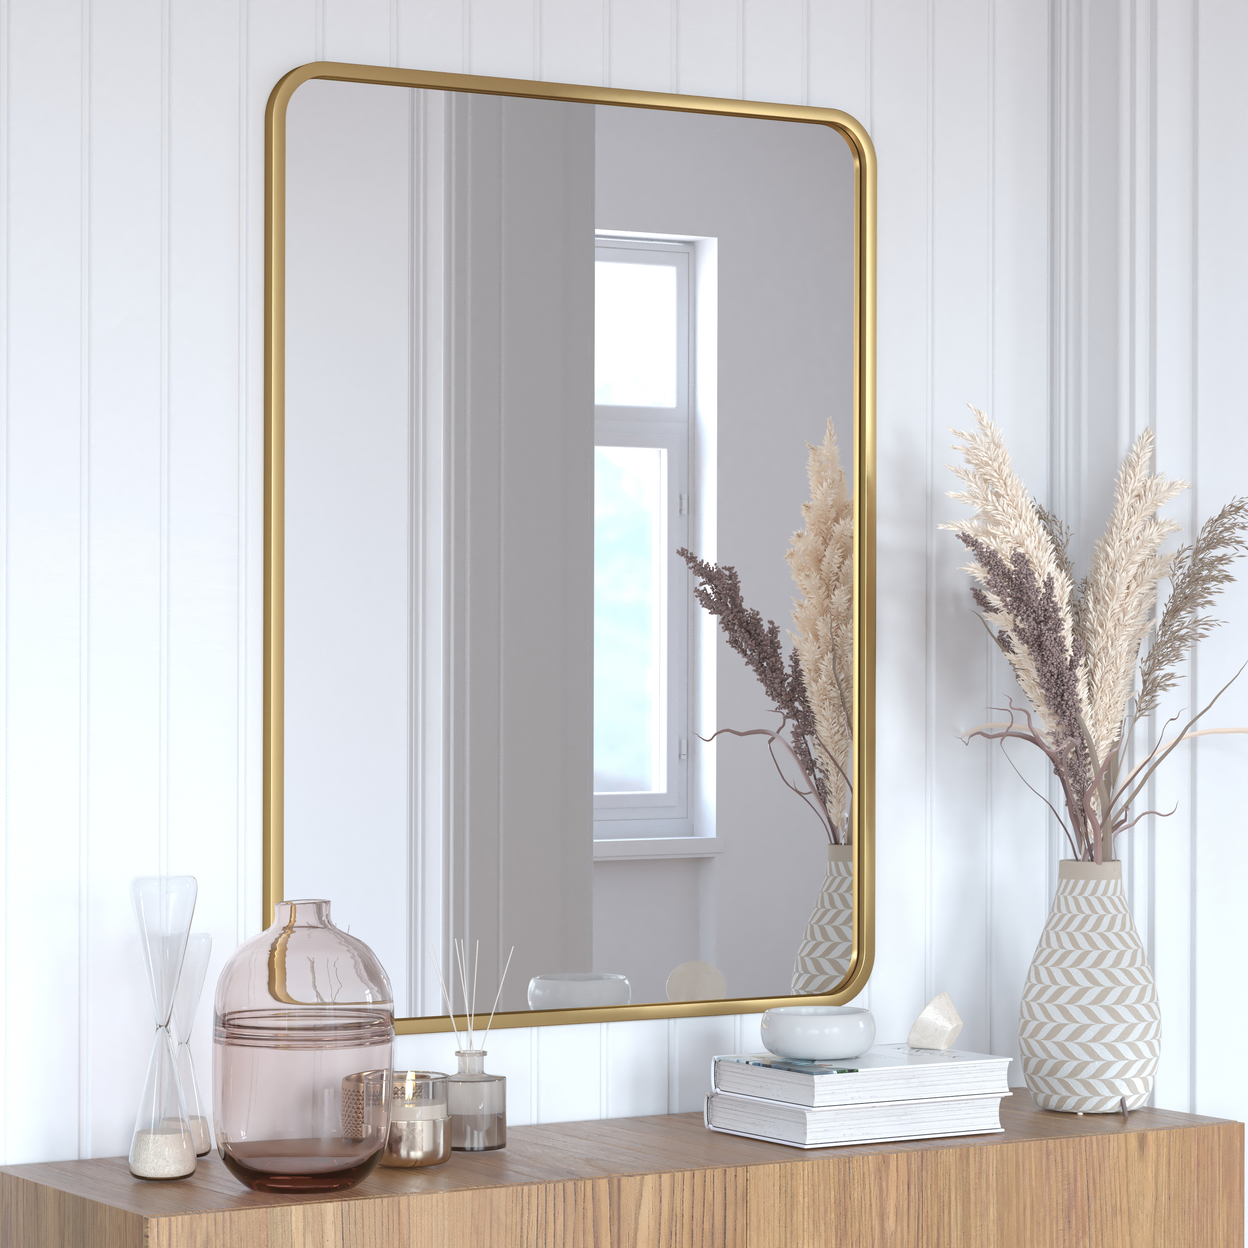 Jada 40 X 30 Decorative Wall Mirror - Rounded Corners, Bathroom & Living Room Glass Mirror Hangs Horizontal Or Vertical, Matte Gold